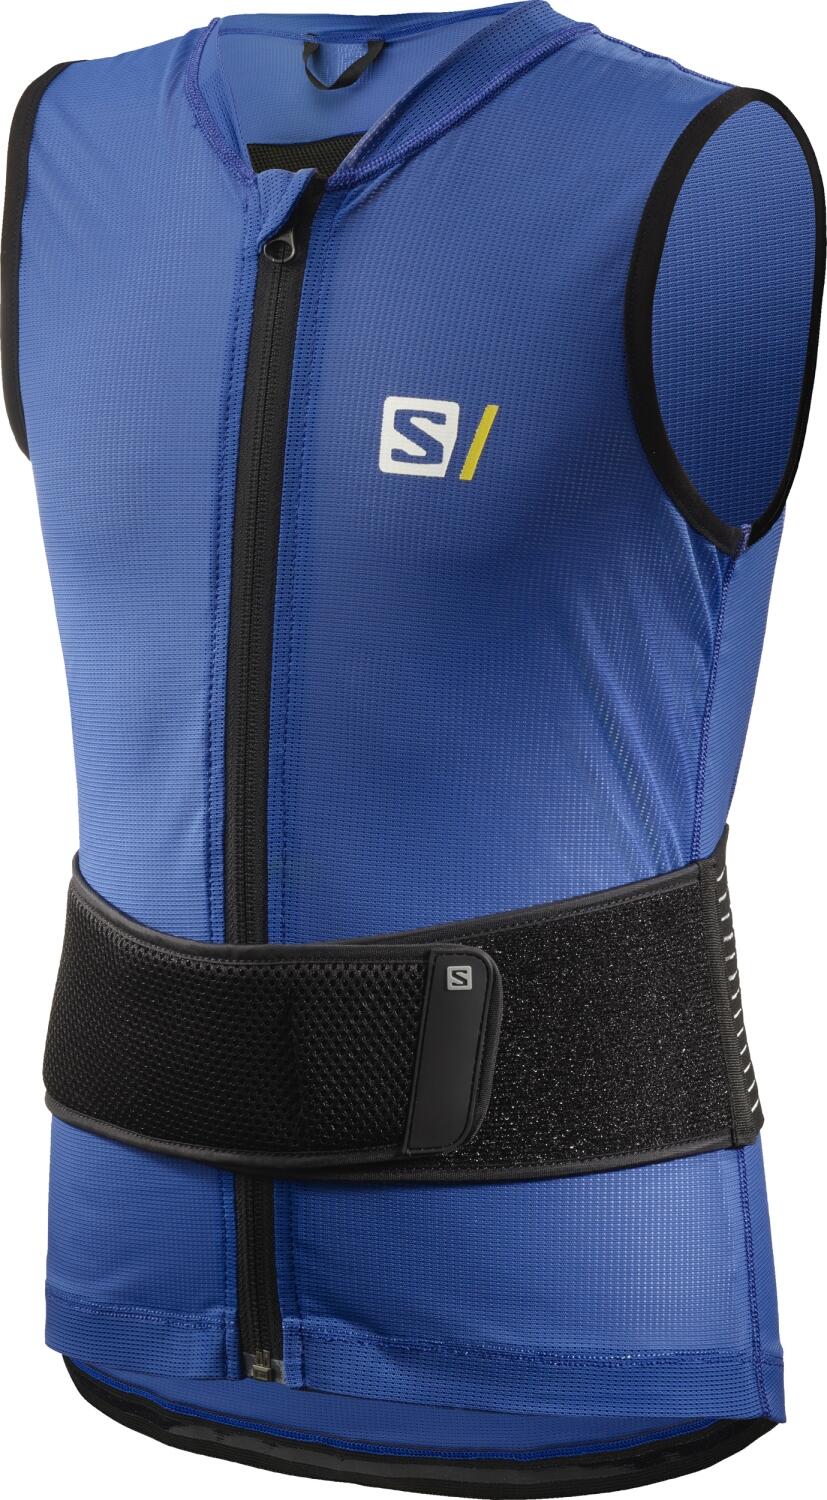 Salomon Flexcell Light Vest Kinder Protektor (M = (Körpergröße 129-140 cm), blue) von Salomon